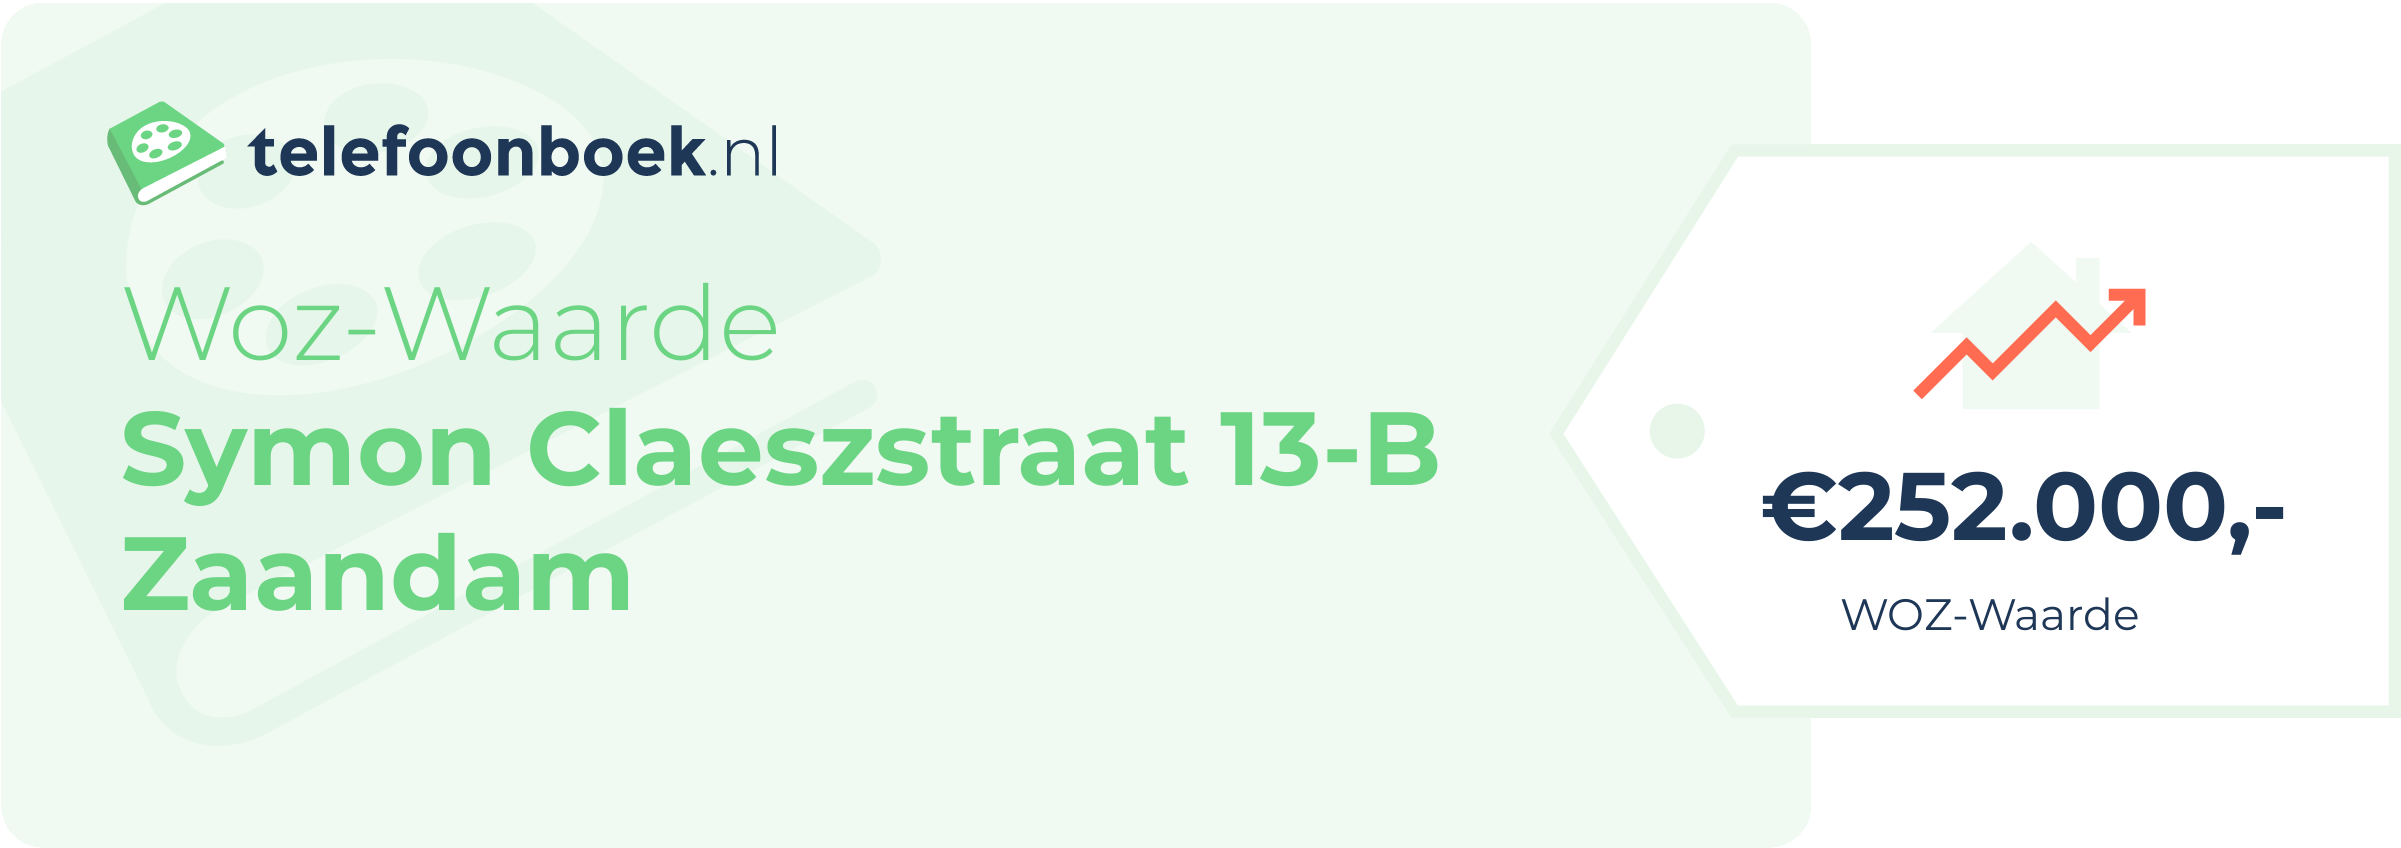 WOZ-waarde Symon Claeszstraat 13-B Zaandam